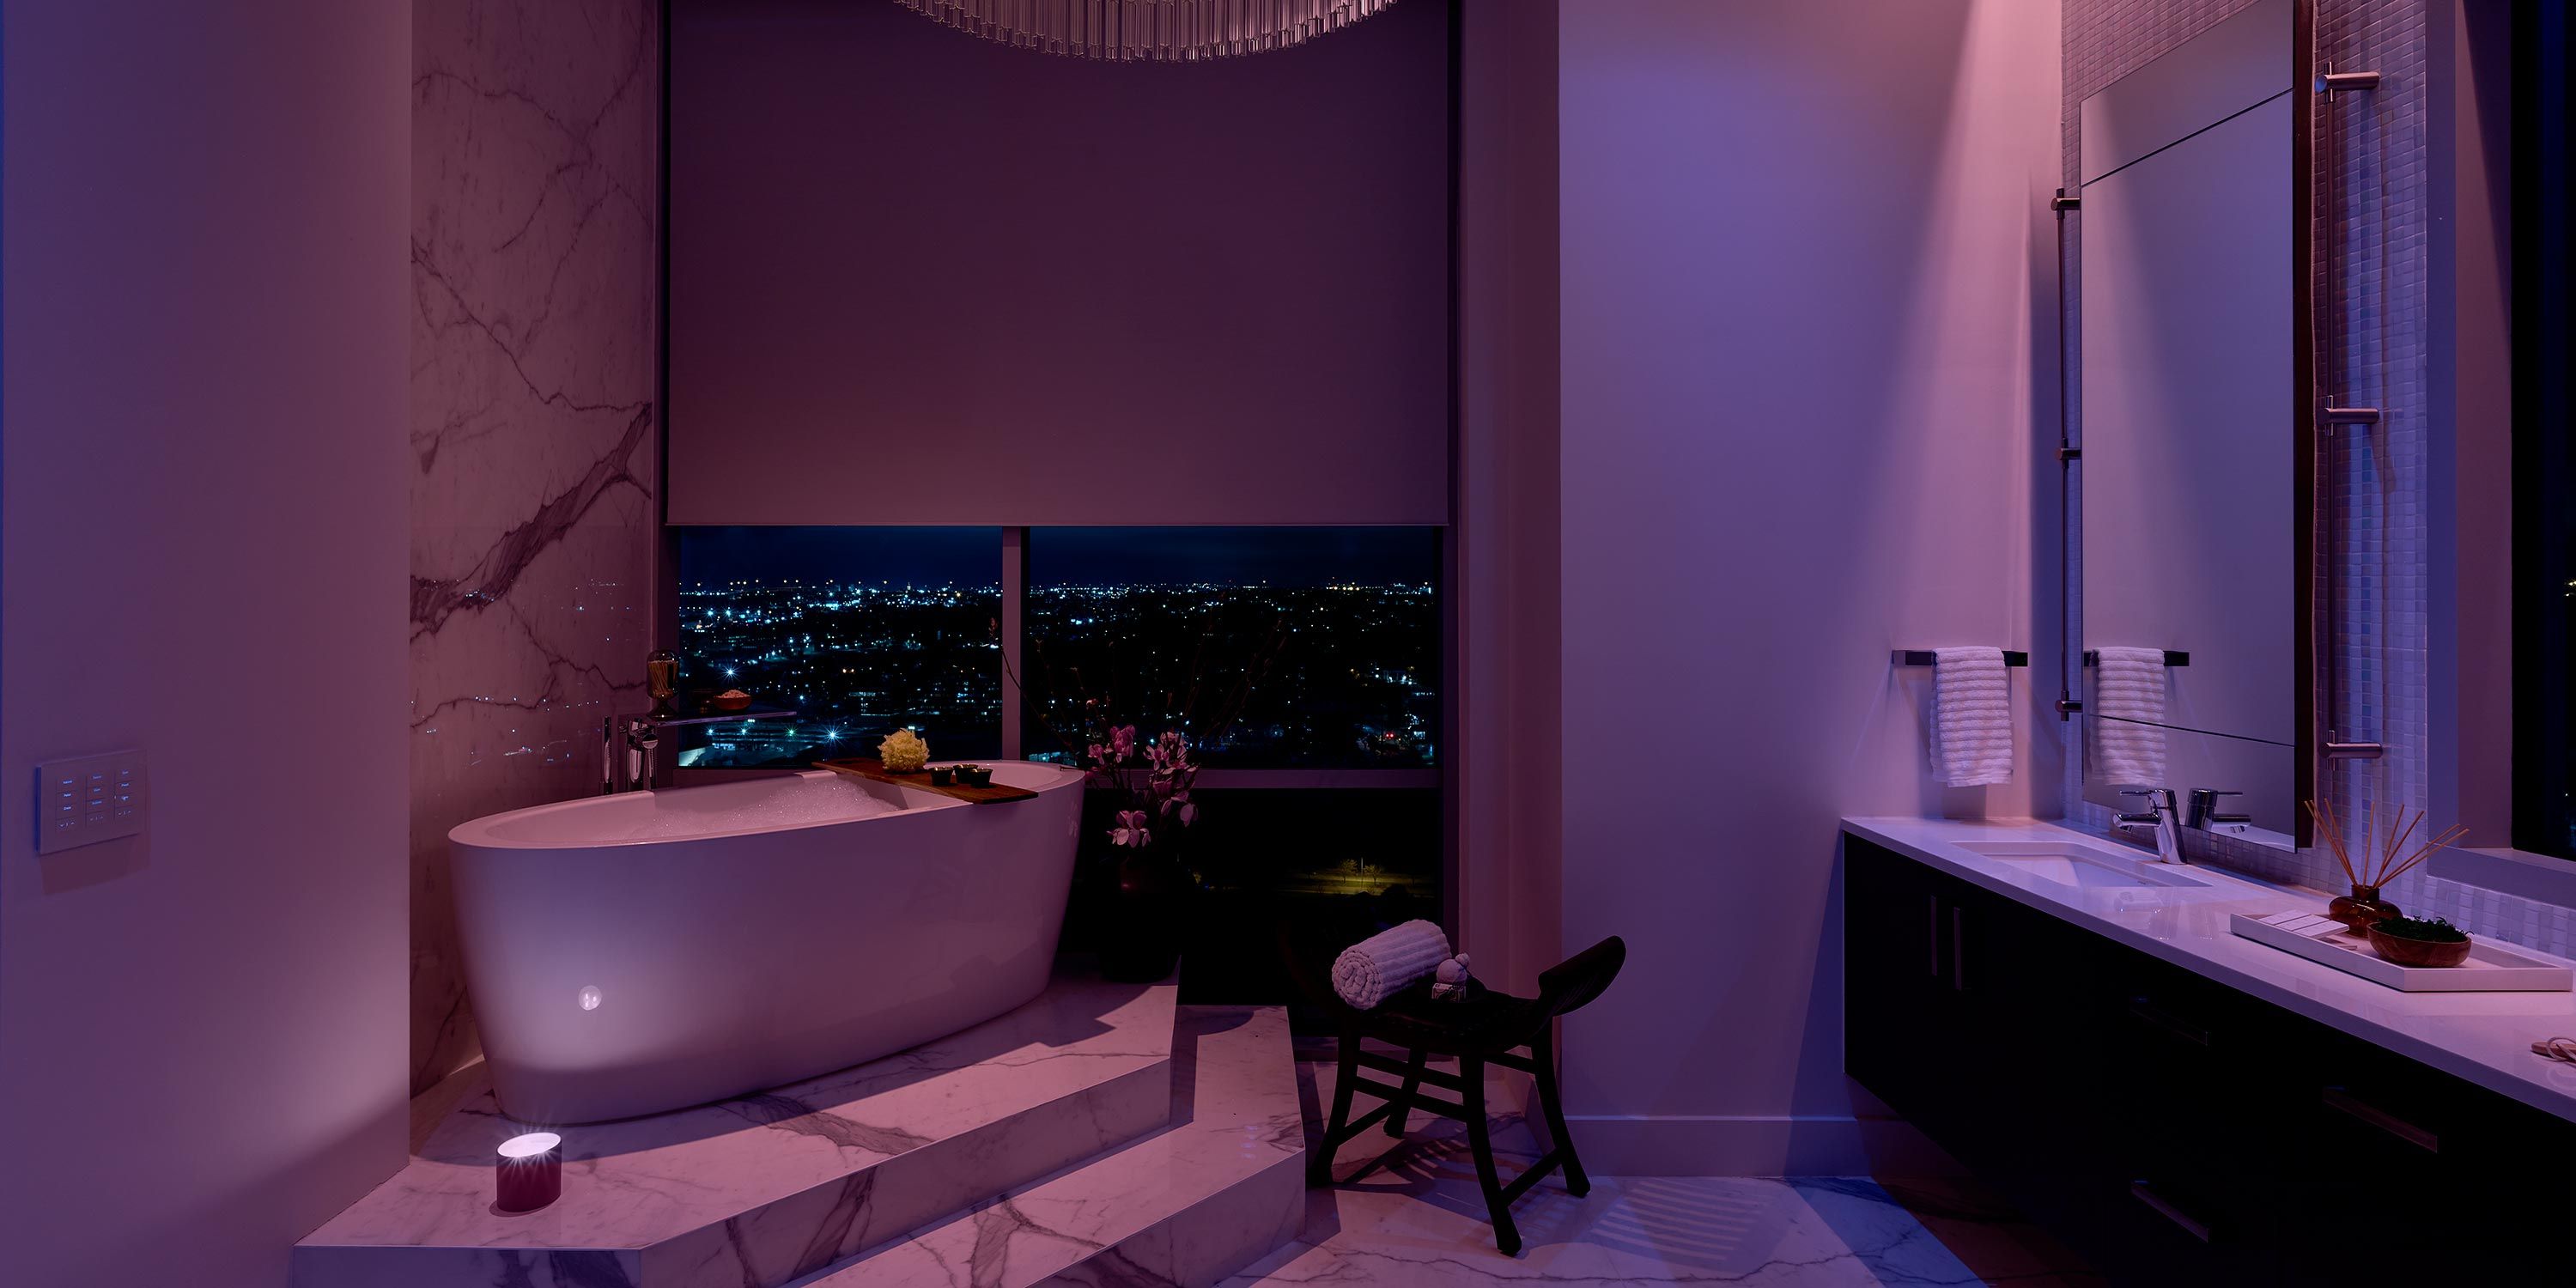 Bathroom at night with purple ketra light and Lutron Keypad